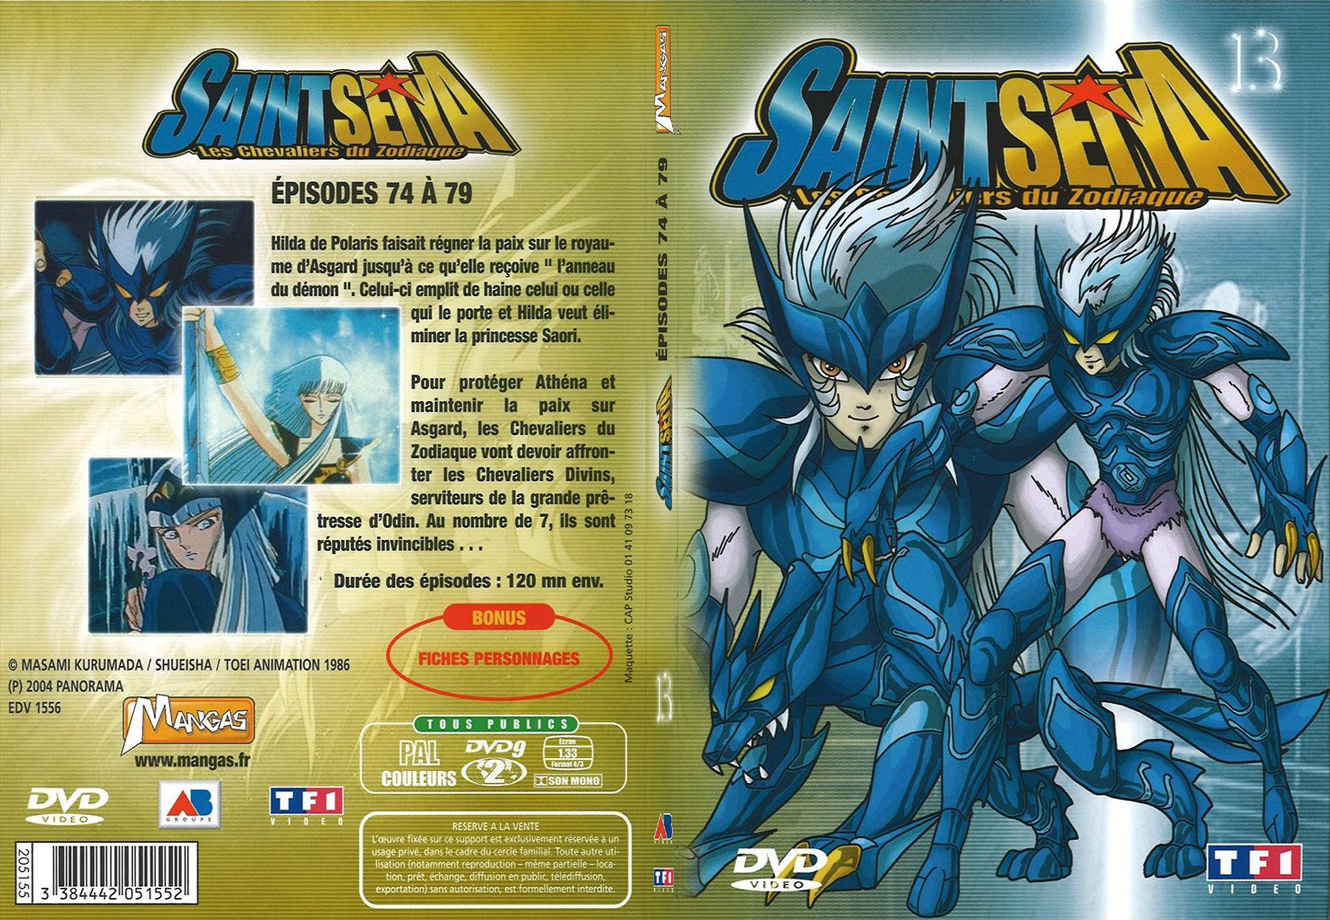 Jaquette DVD Saint Seiya vol 13 - SLIM